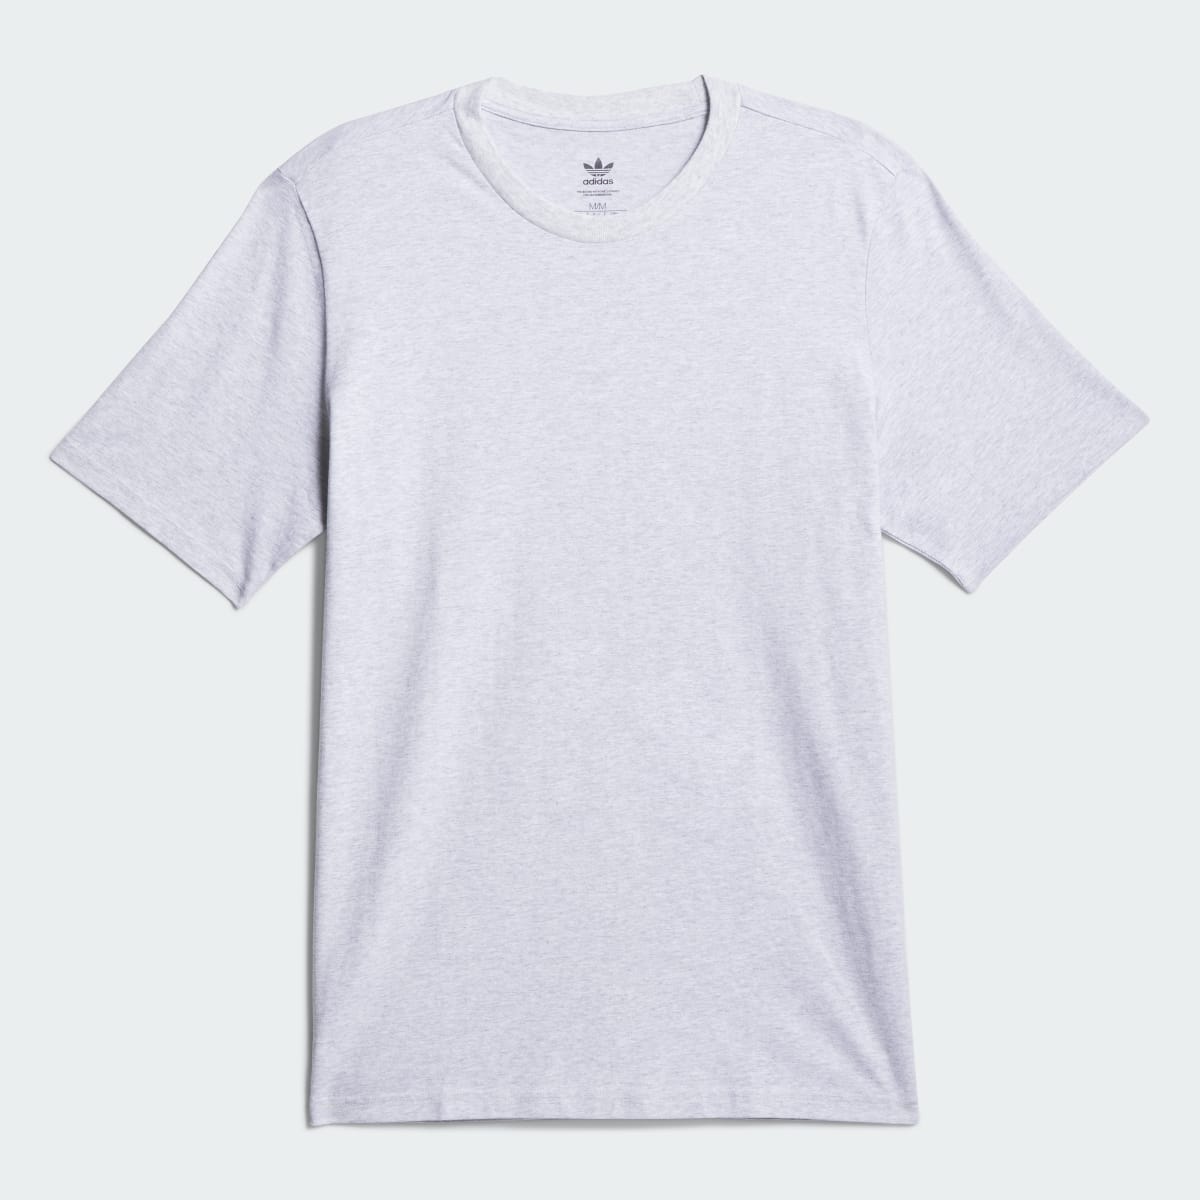 Adidas T-shirt Henry Jones Tyshawn Short Sleeve. 5